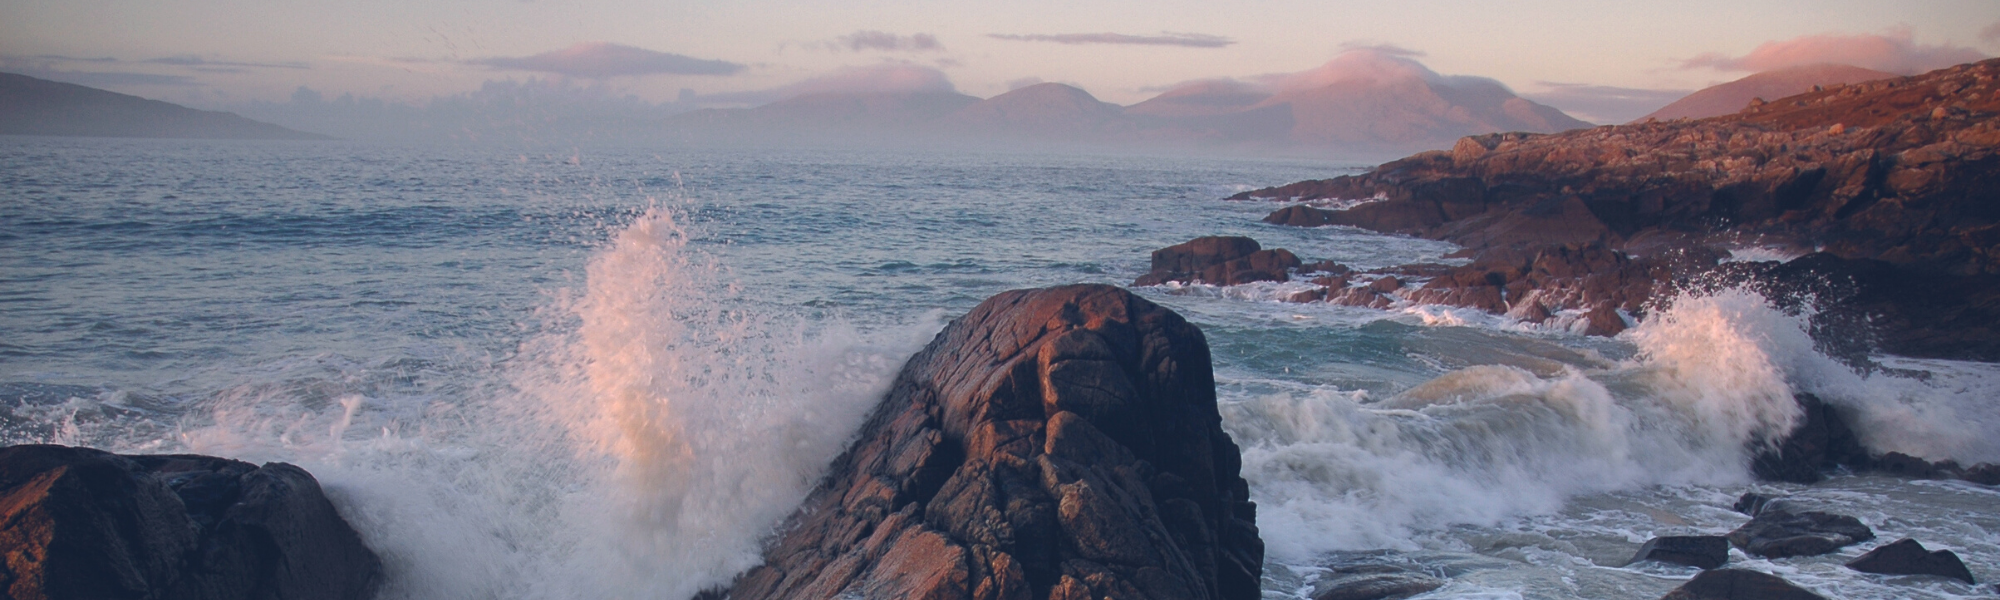 Ocean with waves on rocks